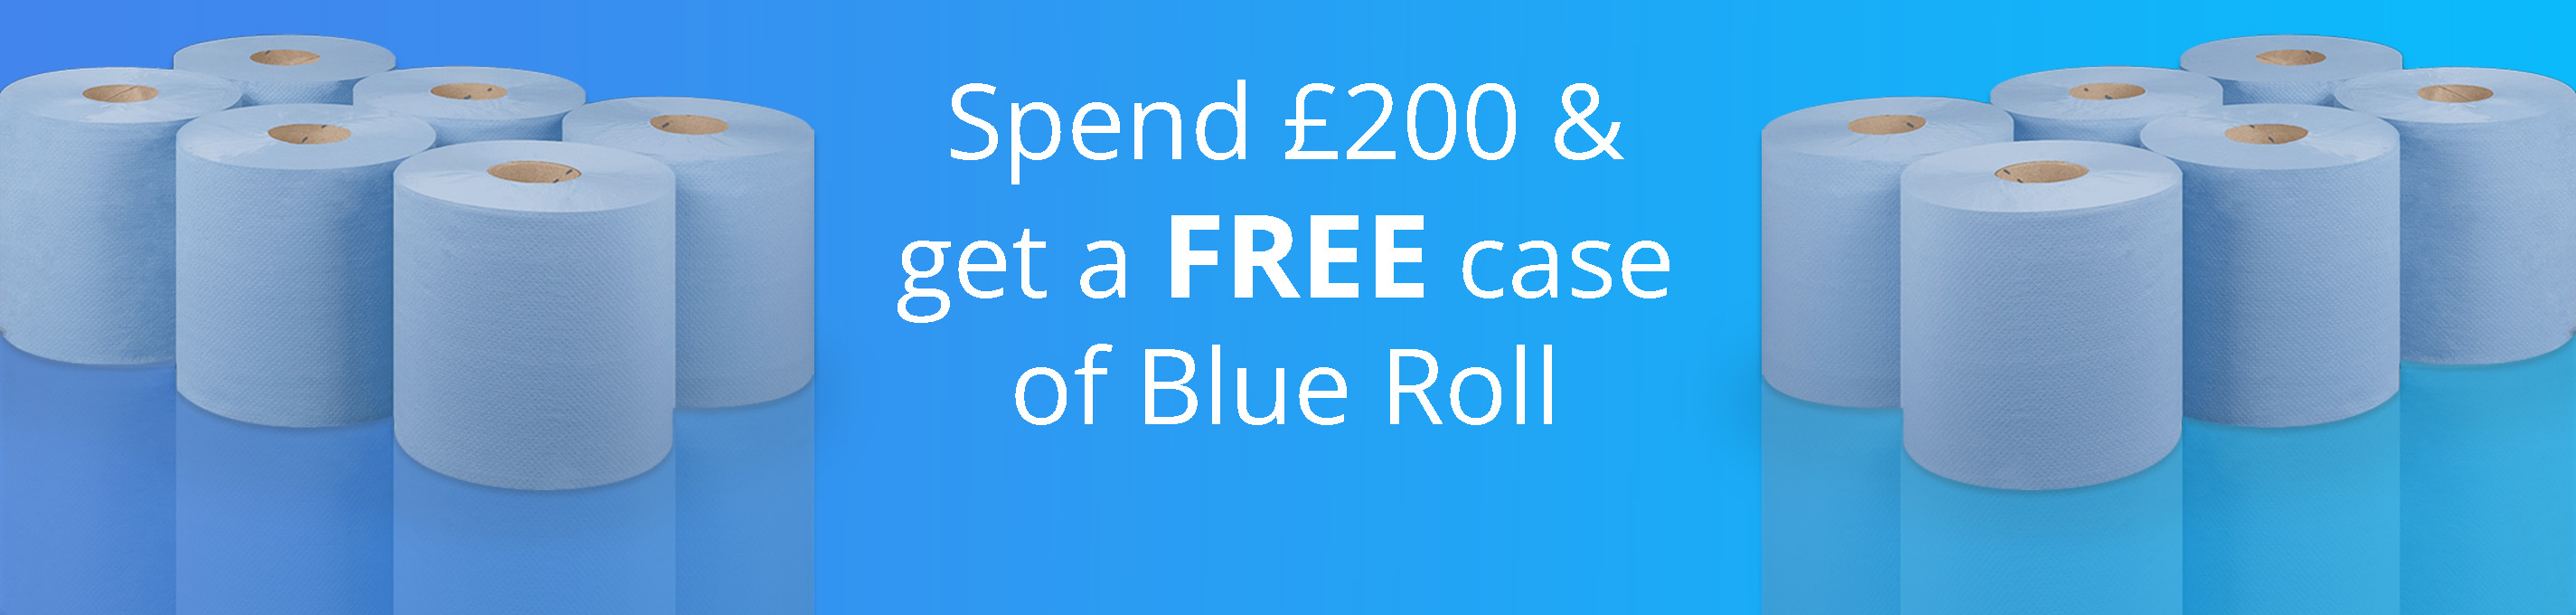 Free Blue Roll!